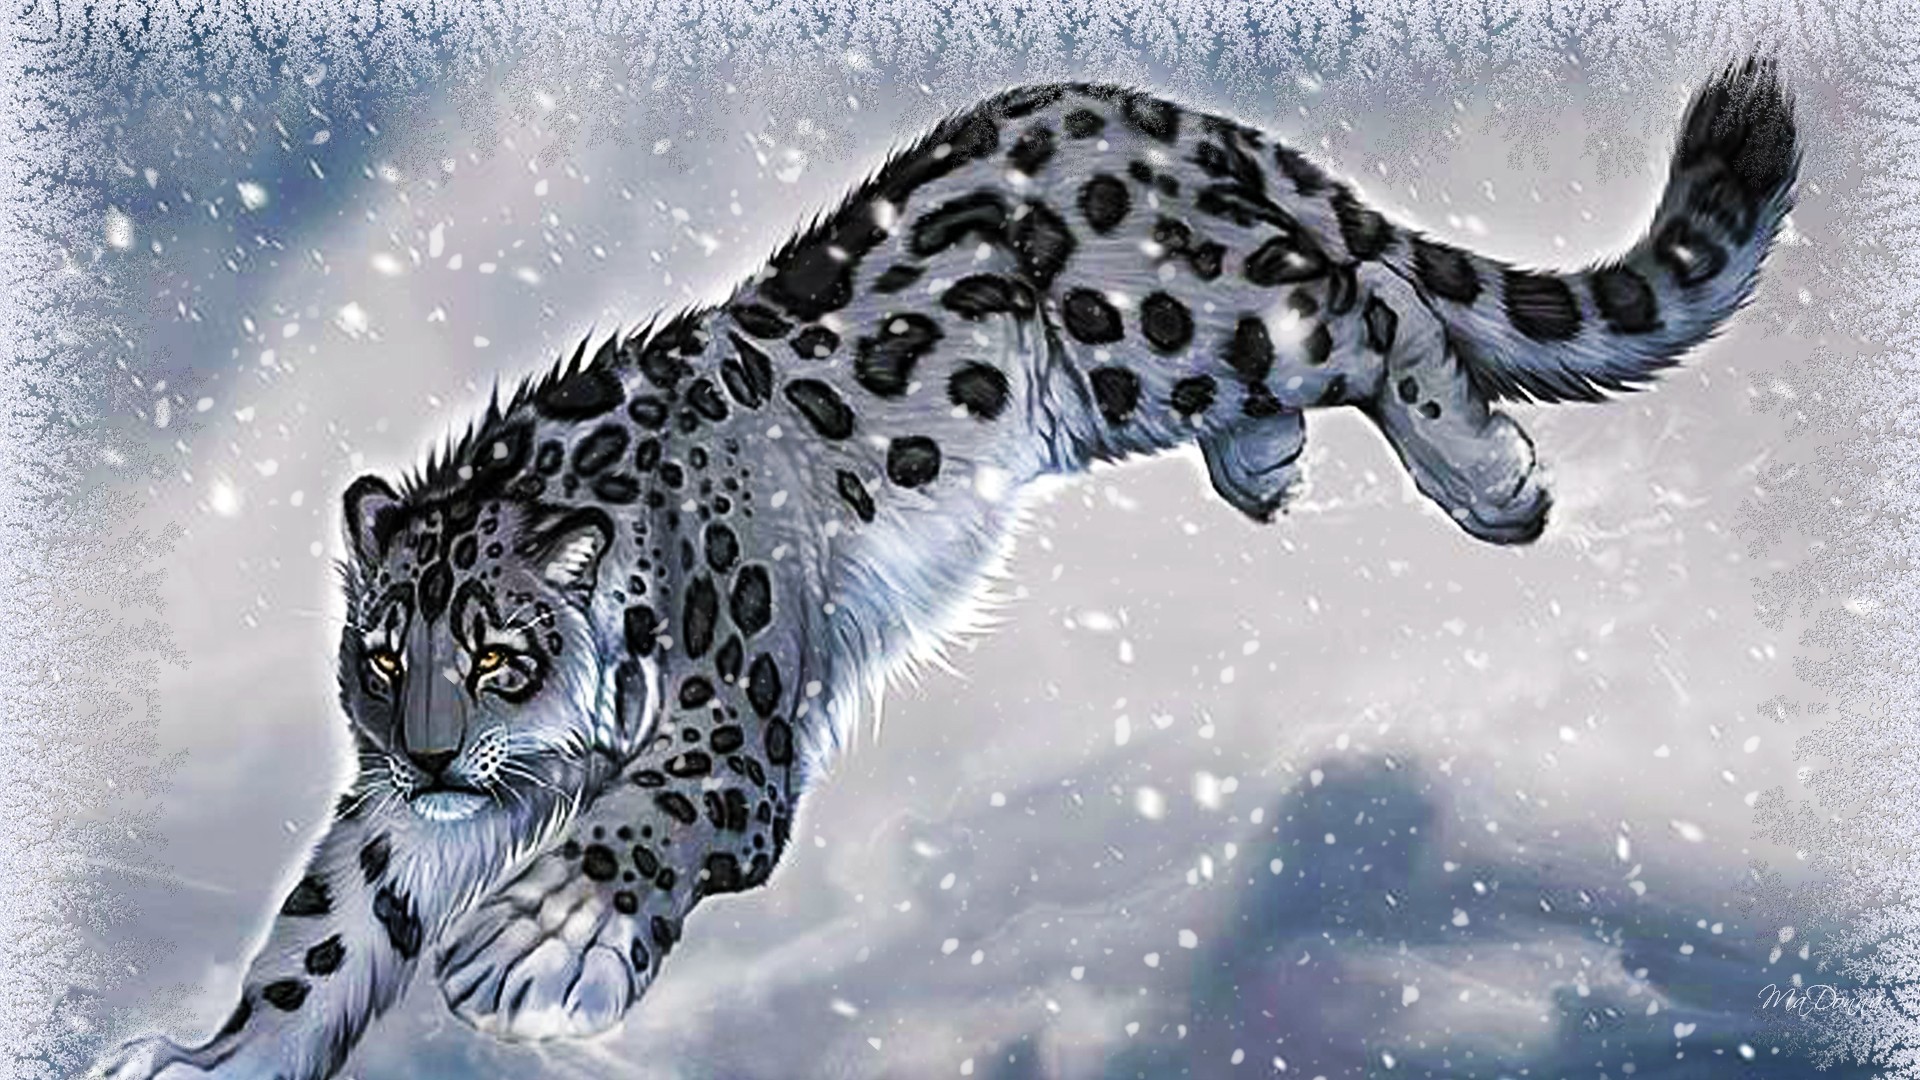 1920x1080 Image - Amazing-animal-snow-leopard-high-resolution-wallpaper-for-desktop -background-download-snow-leopard-images-free.jpg | Animal Jam Clans Wiki |  FANDOM ...